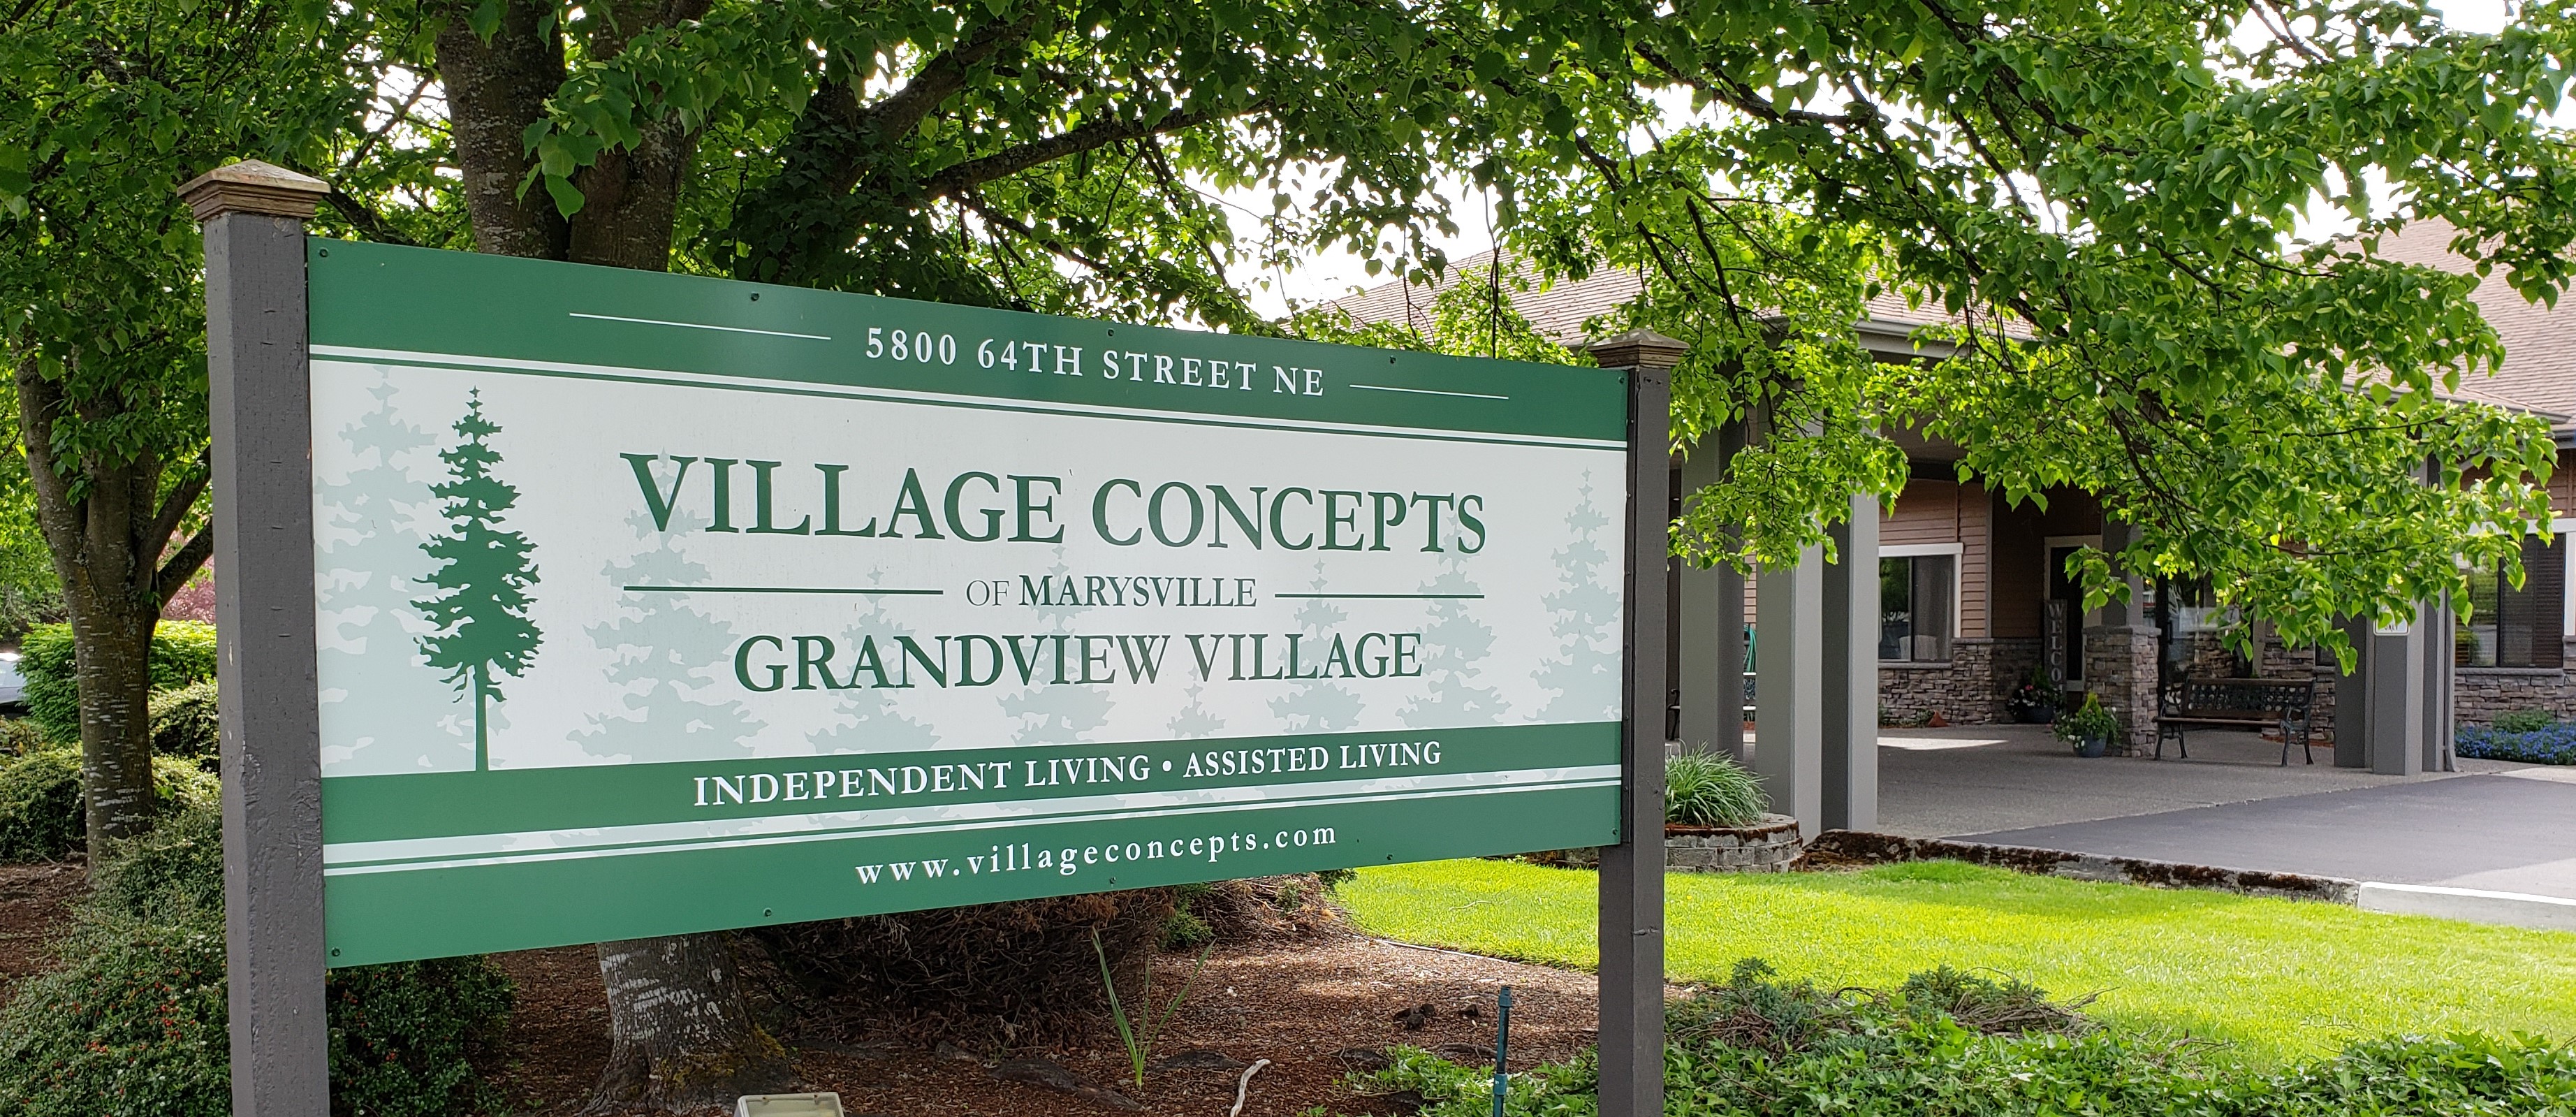 Grandview Village image